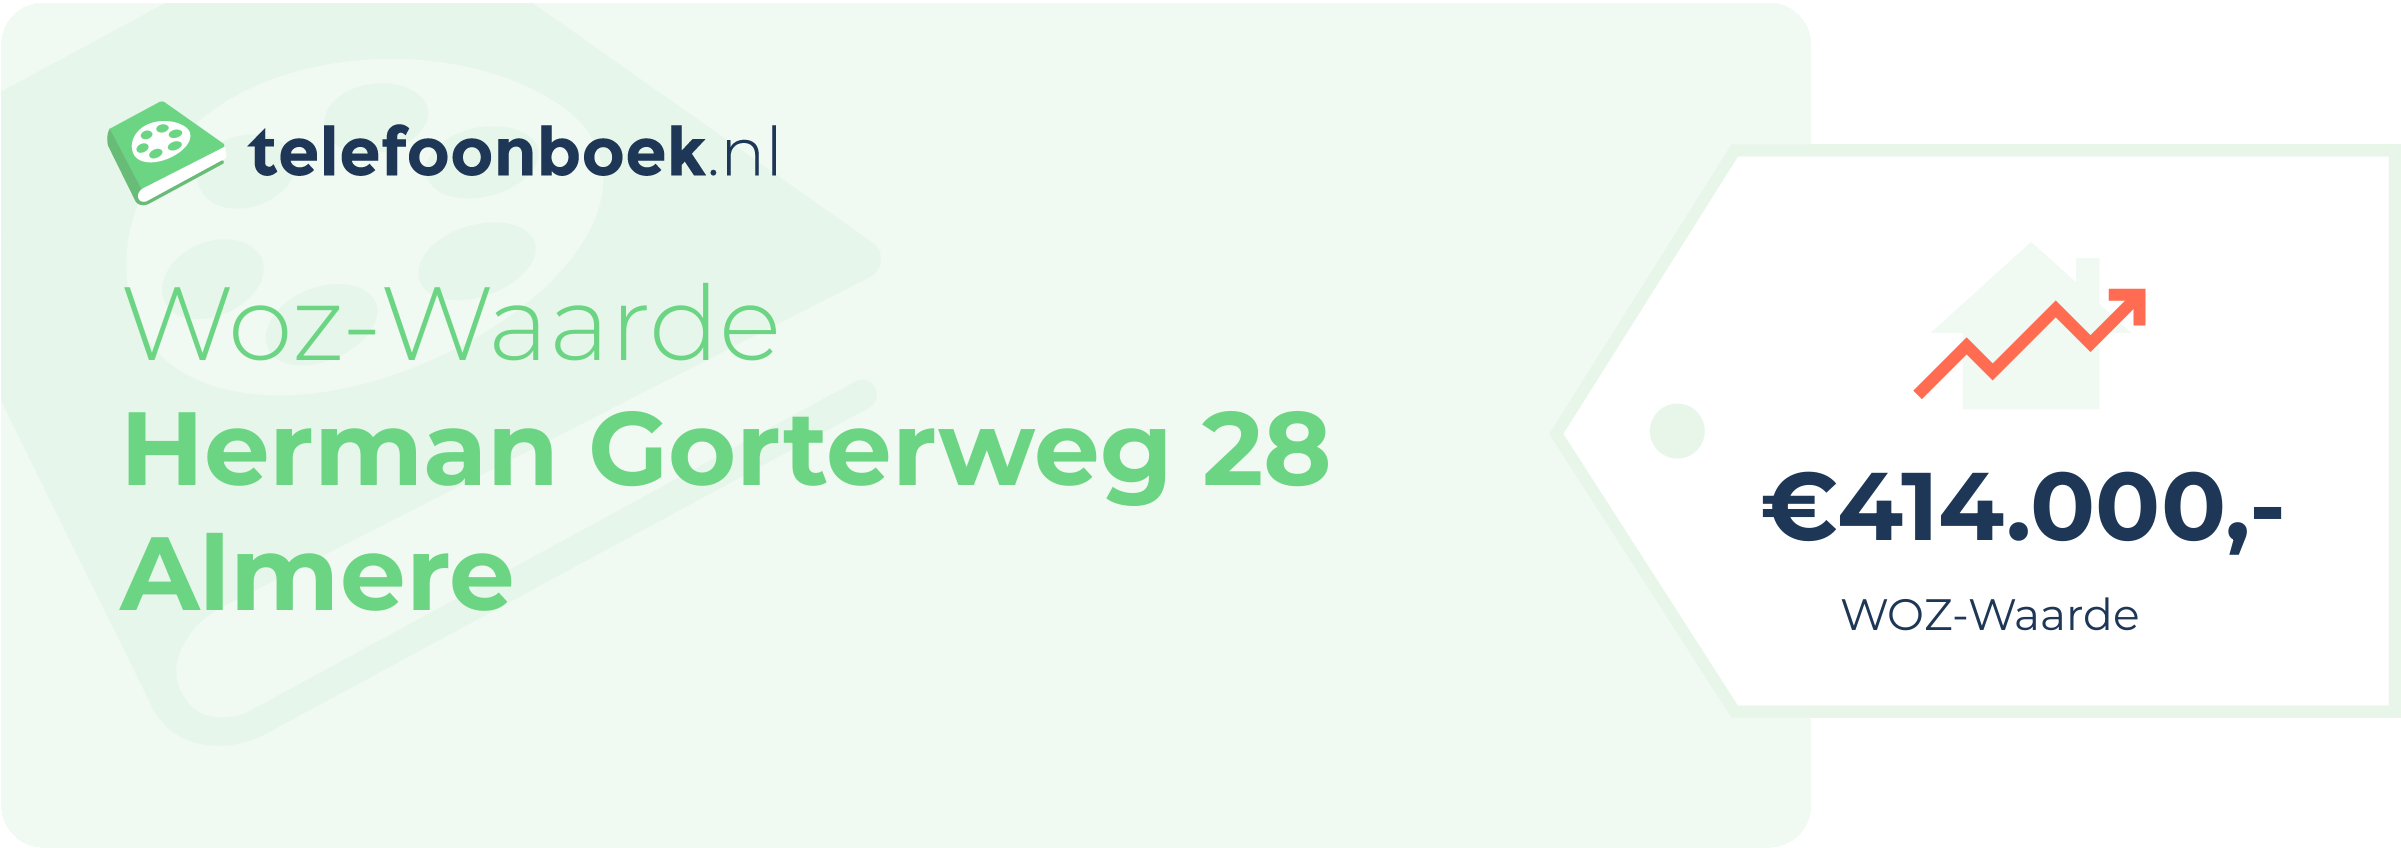 WOZ-waarde Herman Gorterweg 28 Almere